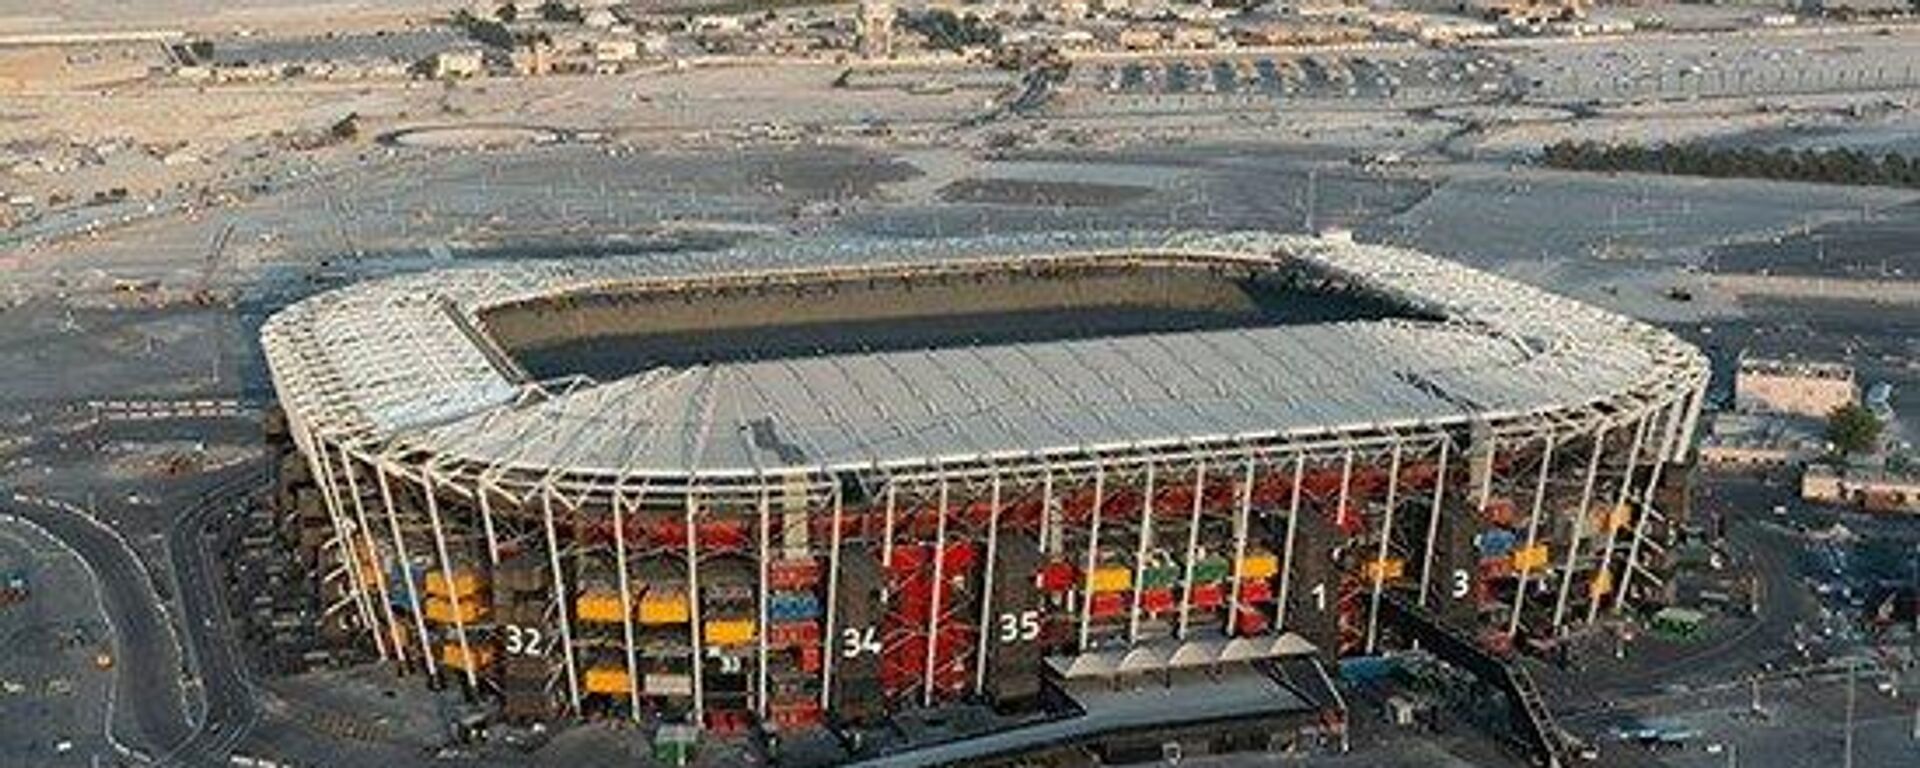 974 Stadium, el estadio estrella del Mundial de Catar 2022 - Sputnik Mundo, 1920, 02.05.2022